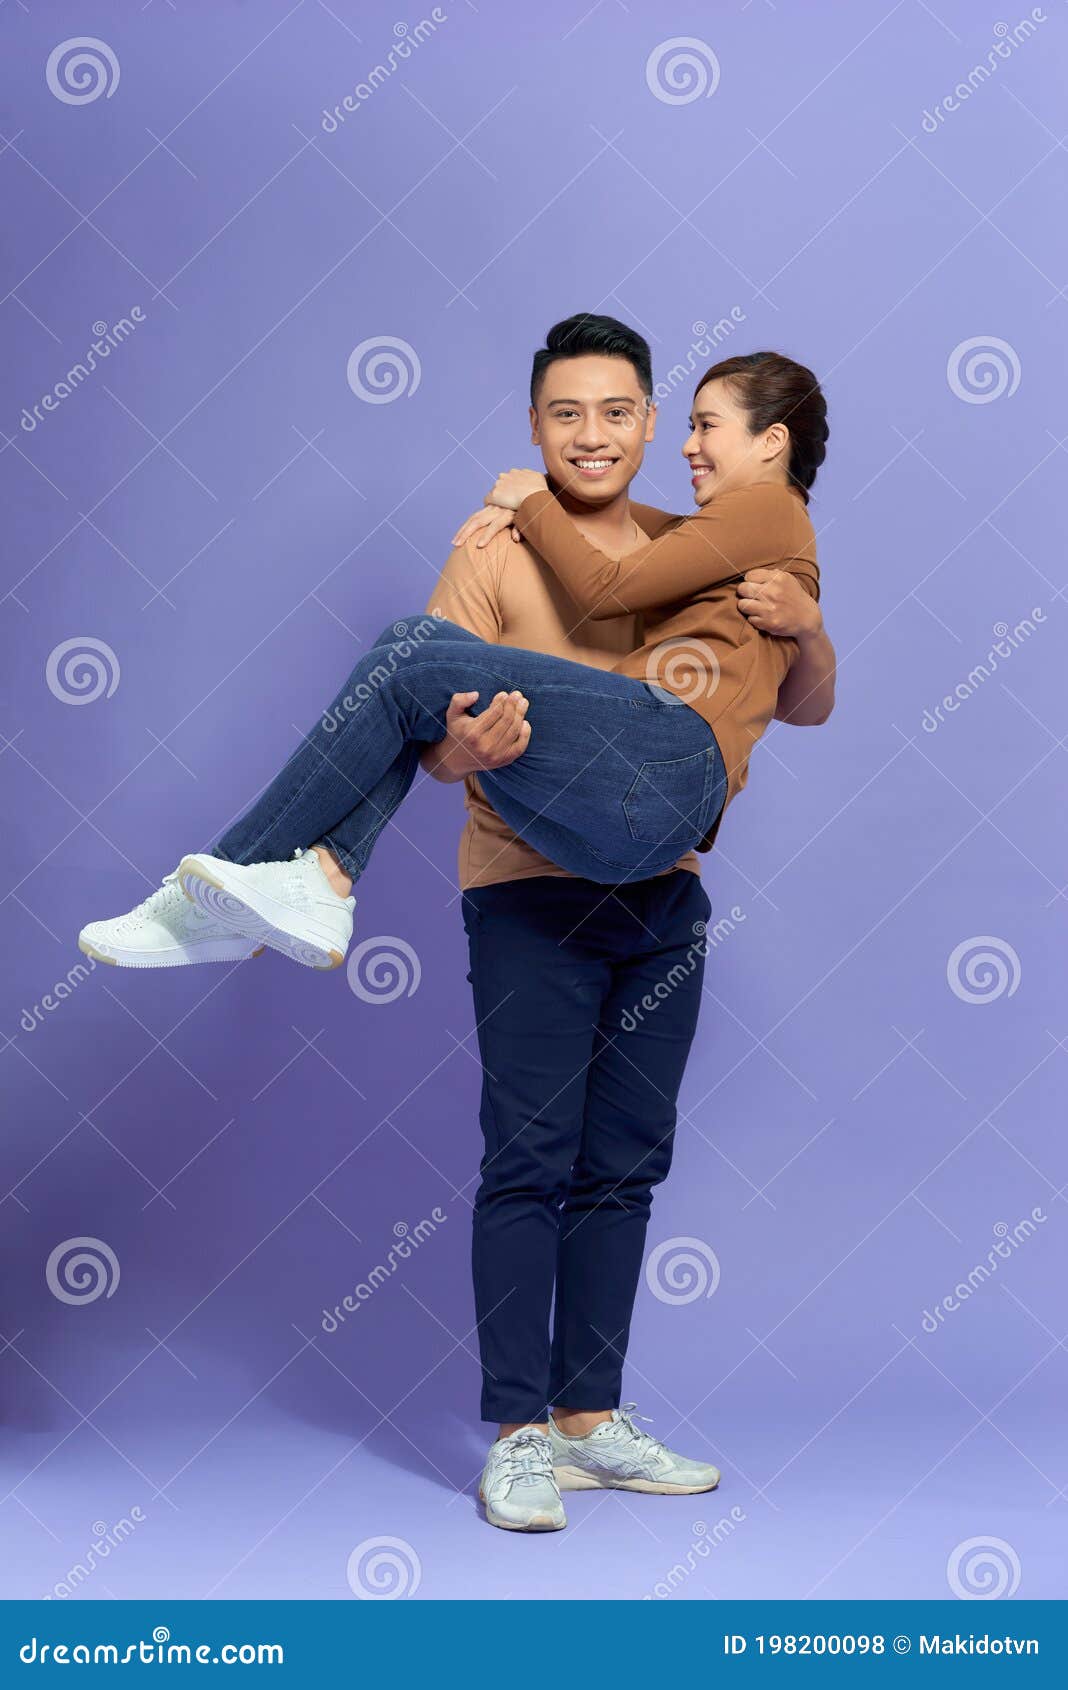 657 Boyfriend Holding Girlfriend His Arms Stock Photos photo